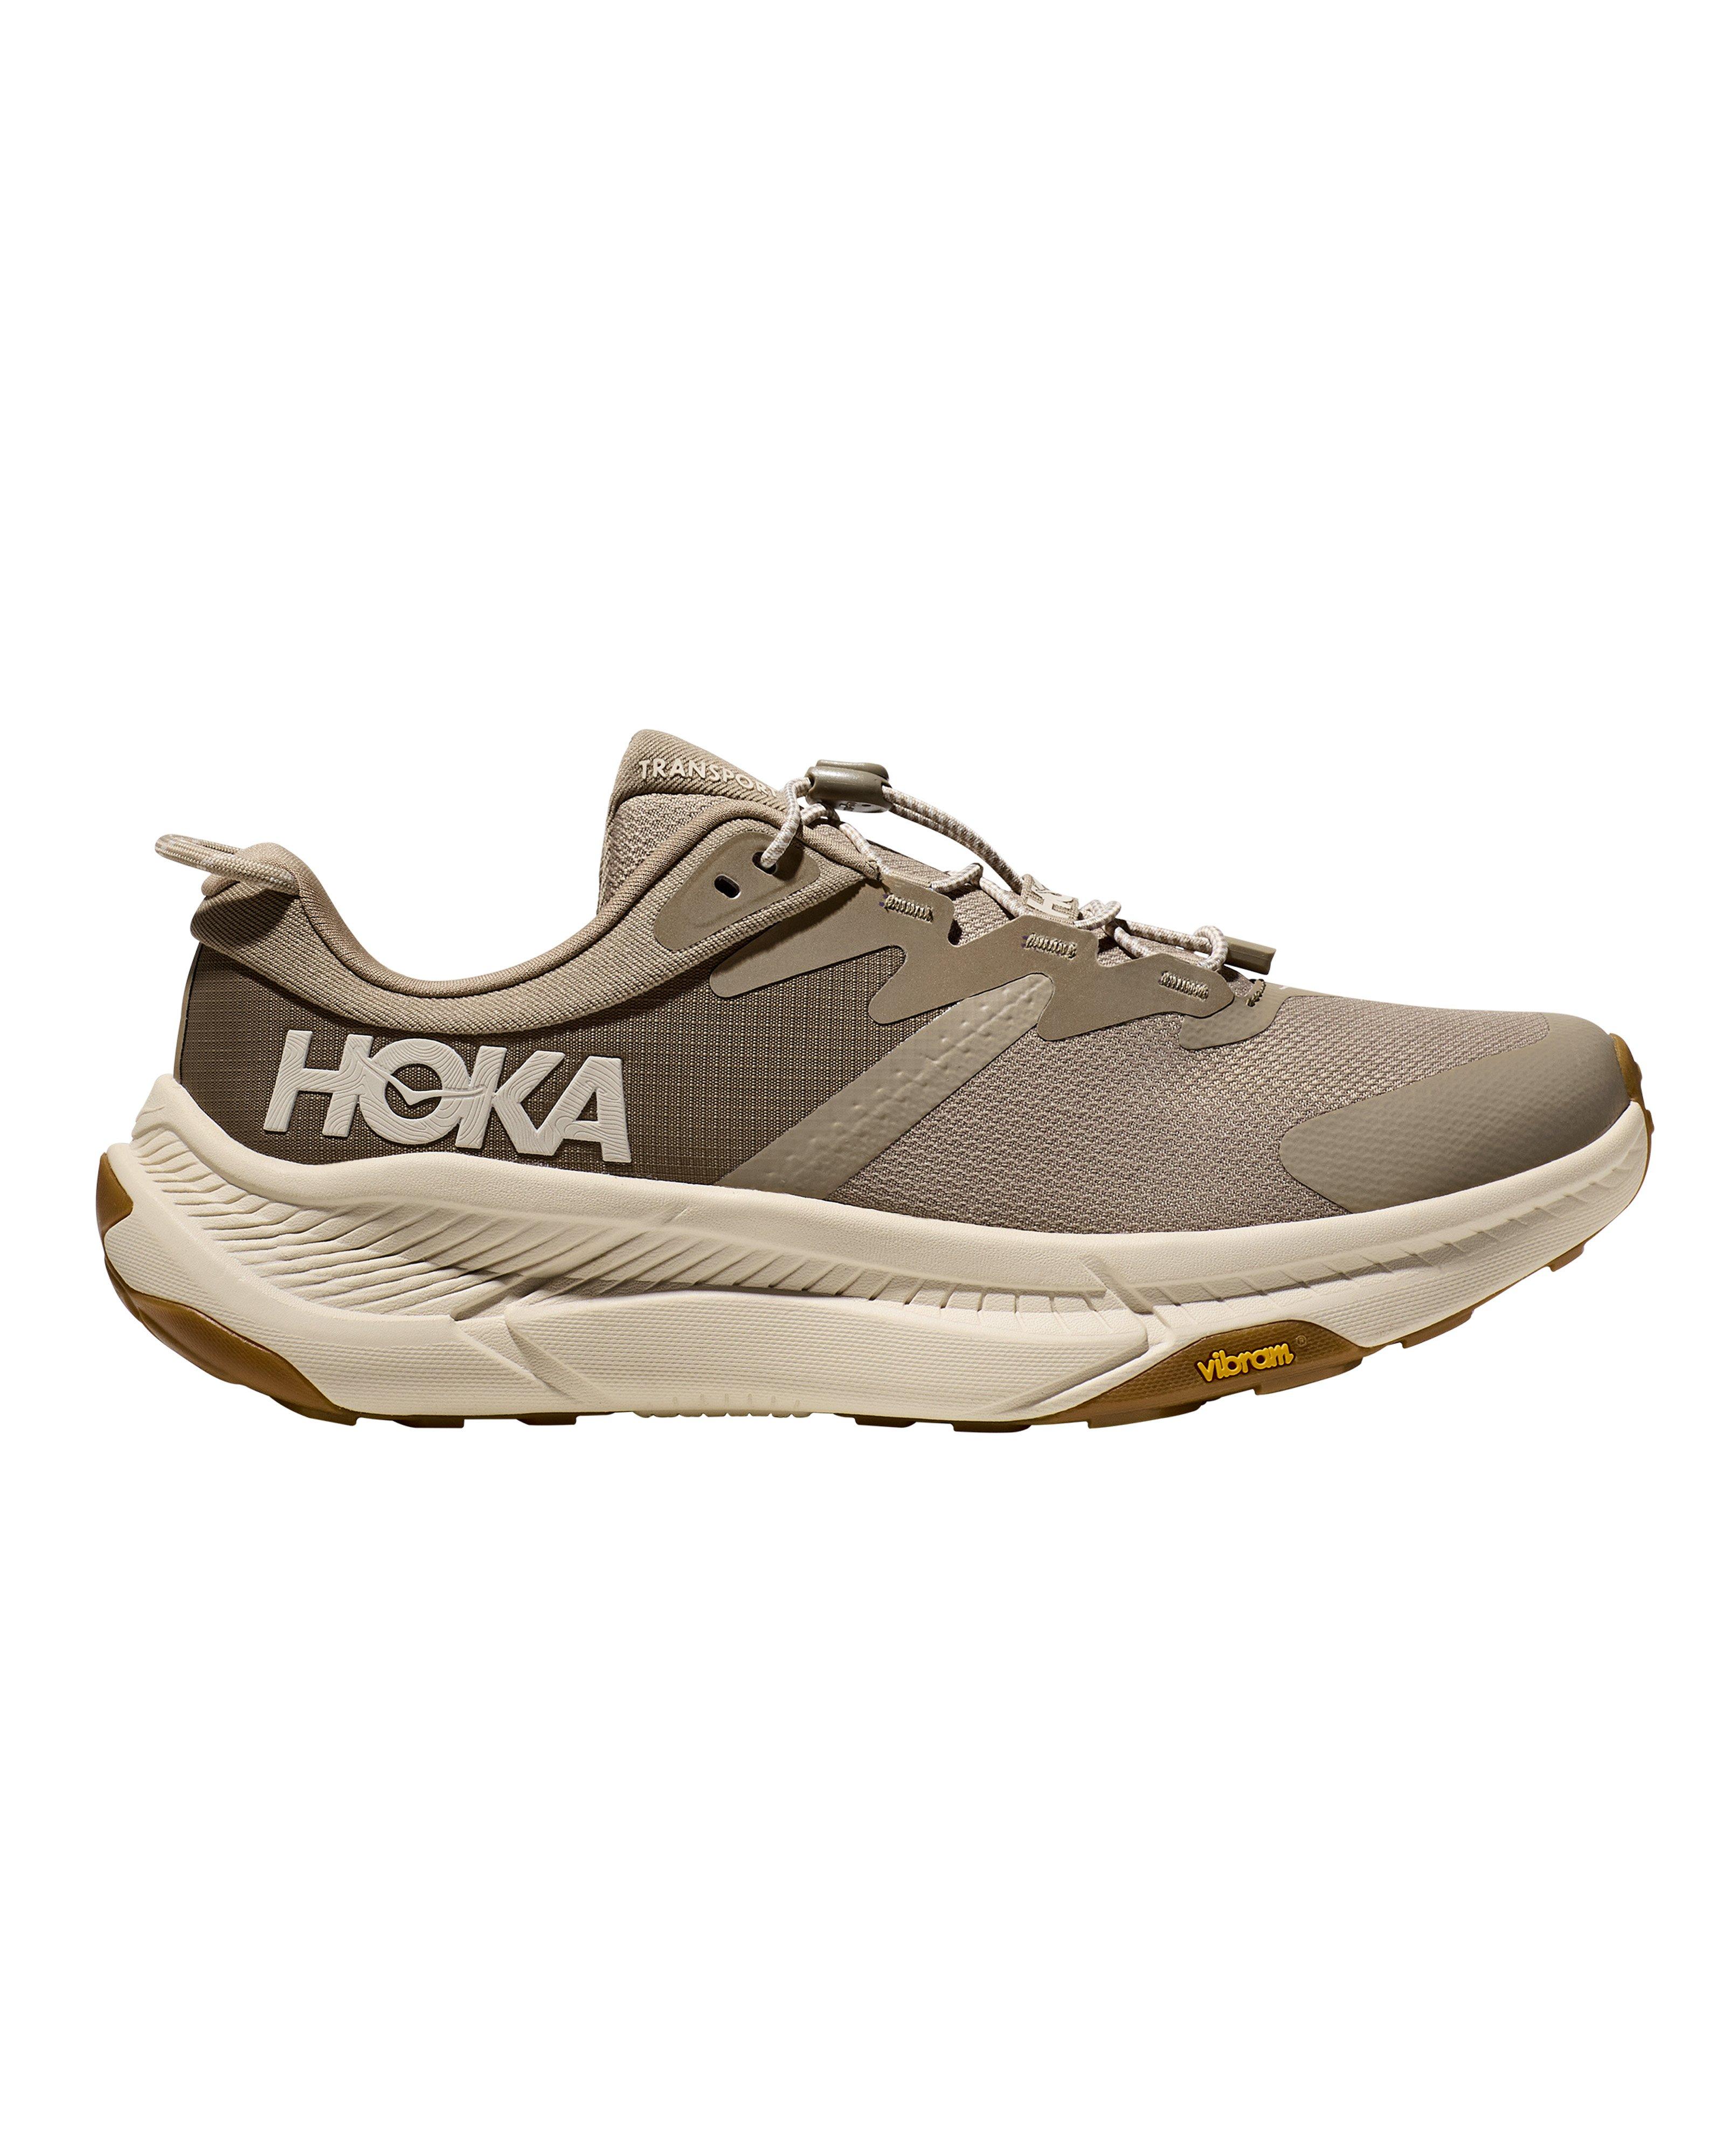 HOKA Men's Transport Sneakers -  Taupe